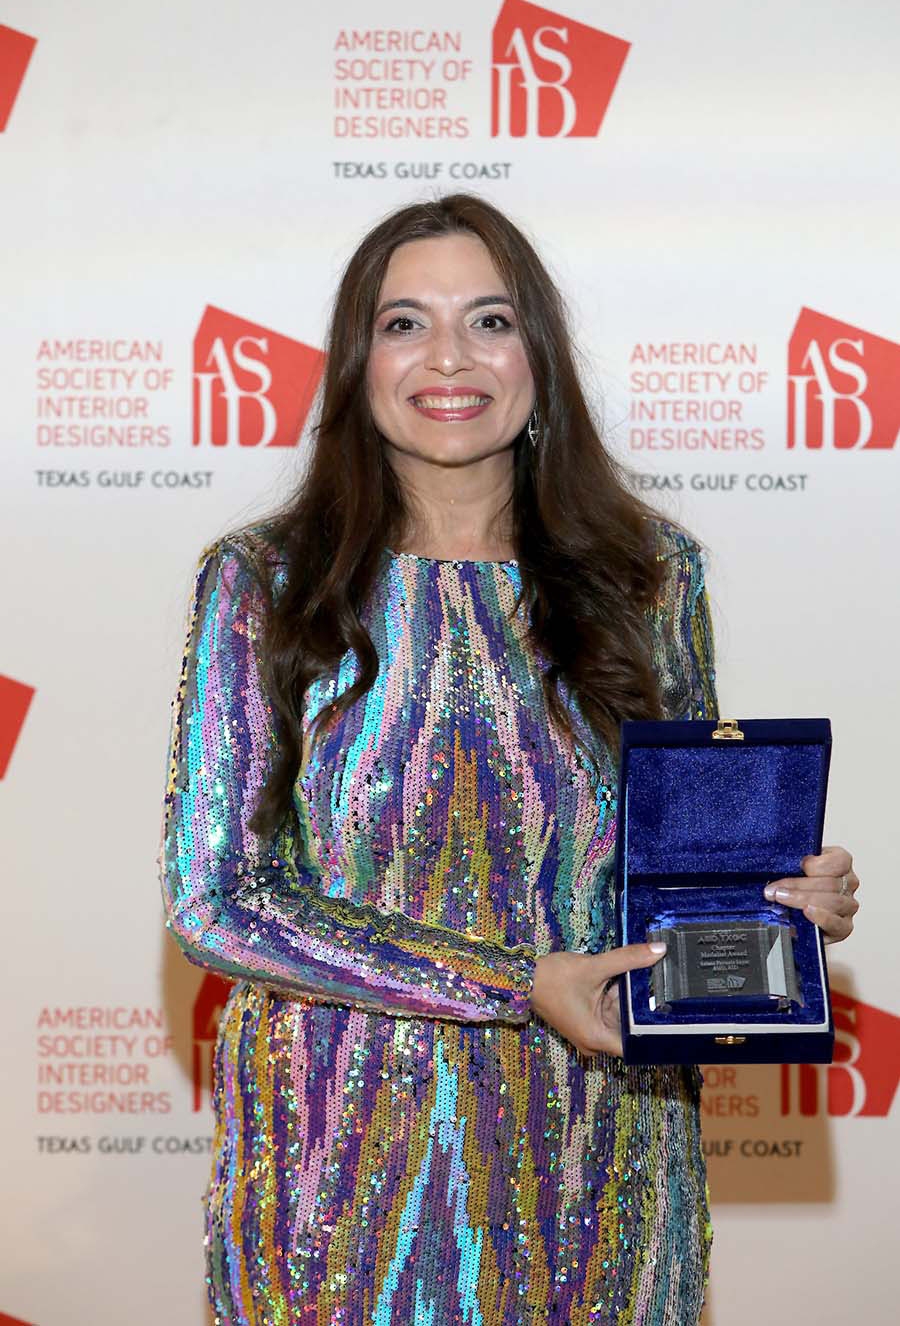 Saima Seyar, ASID RID holding her merit award by ASID Texas Gulf Coast chapter.